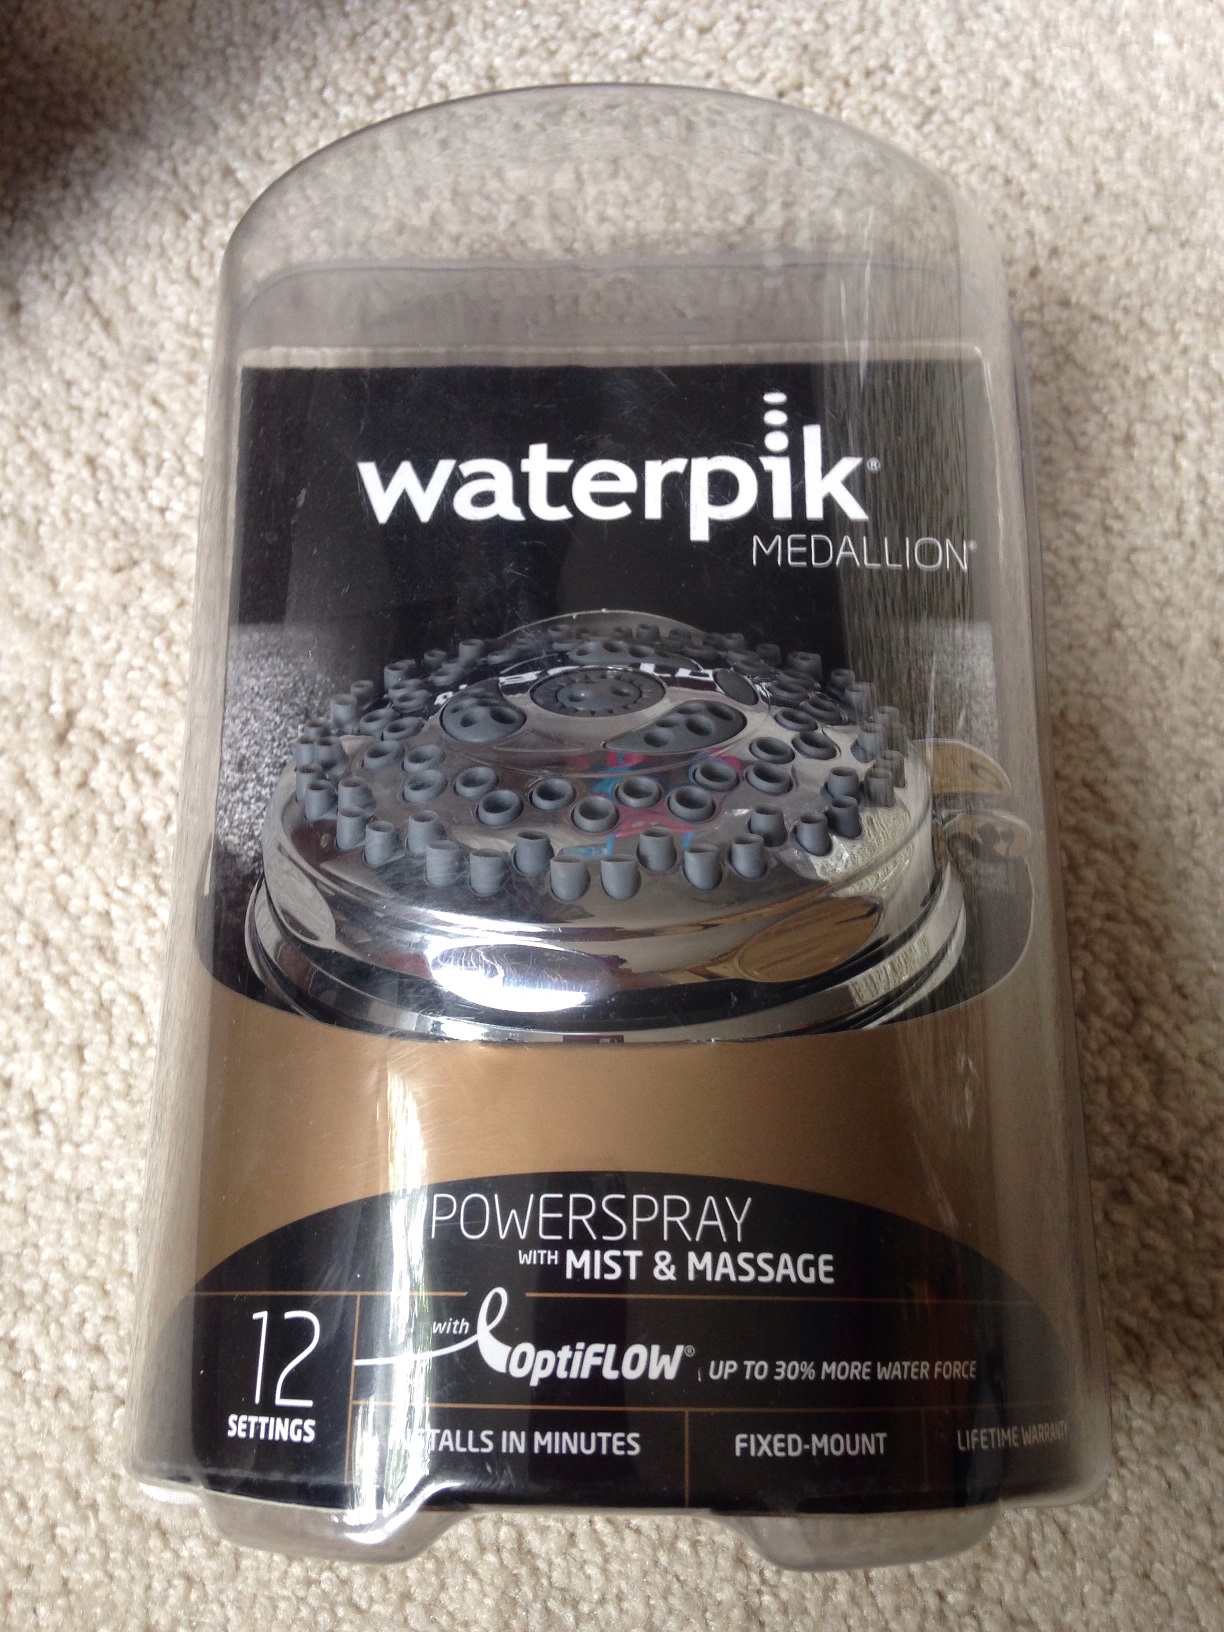 New   Waterpik Medallion Powerspray Showerhead with Mist ...